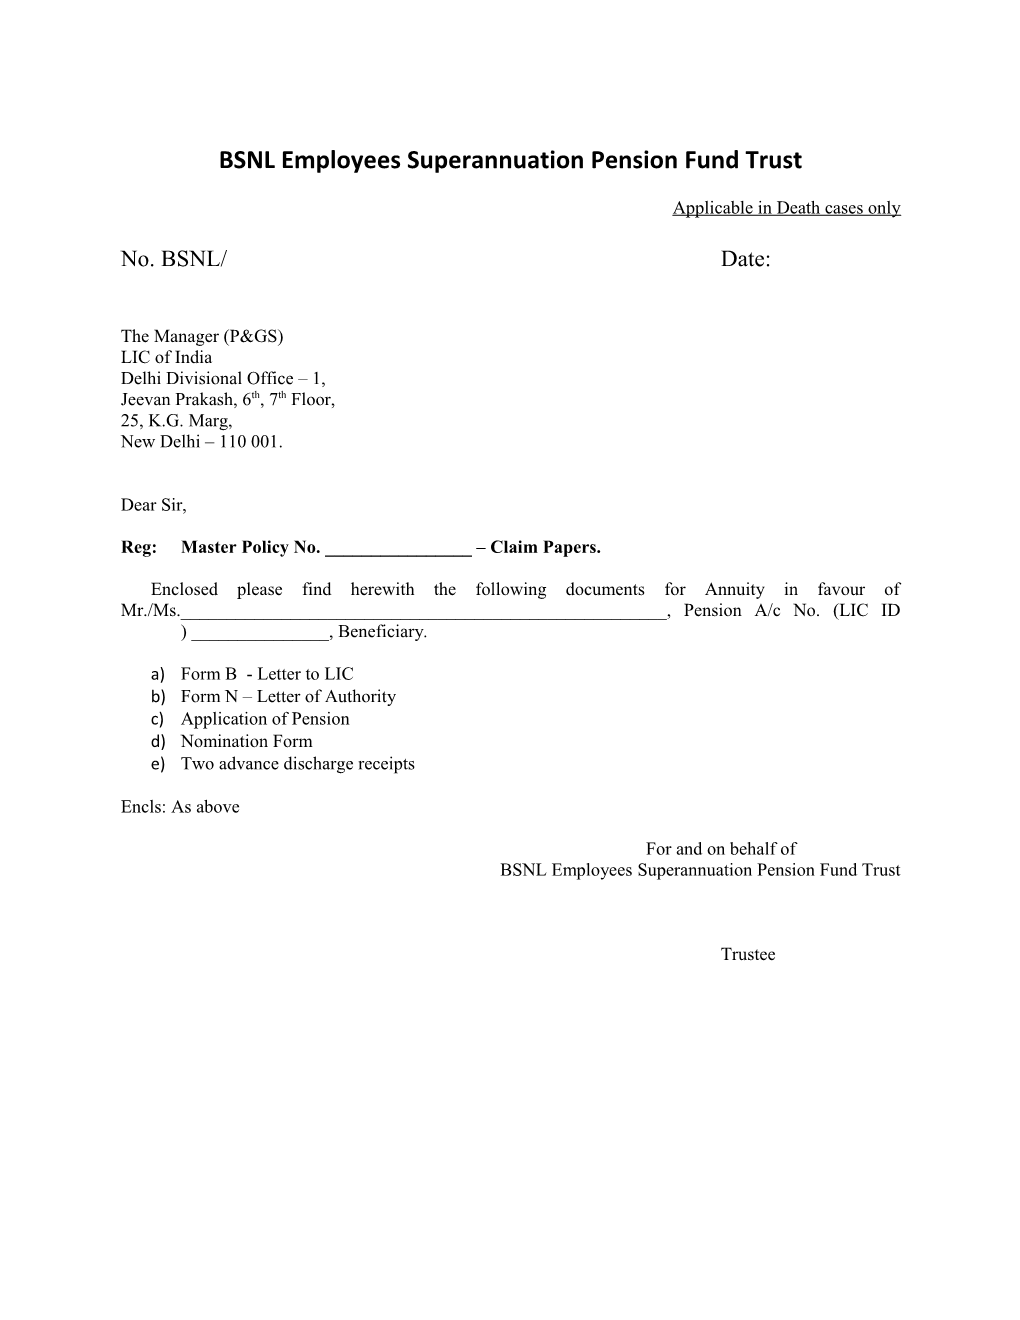 BSNL Employees Superannuation Pension Scheme